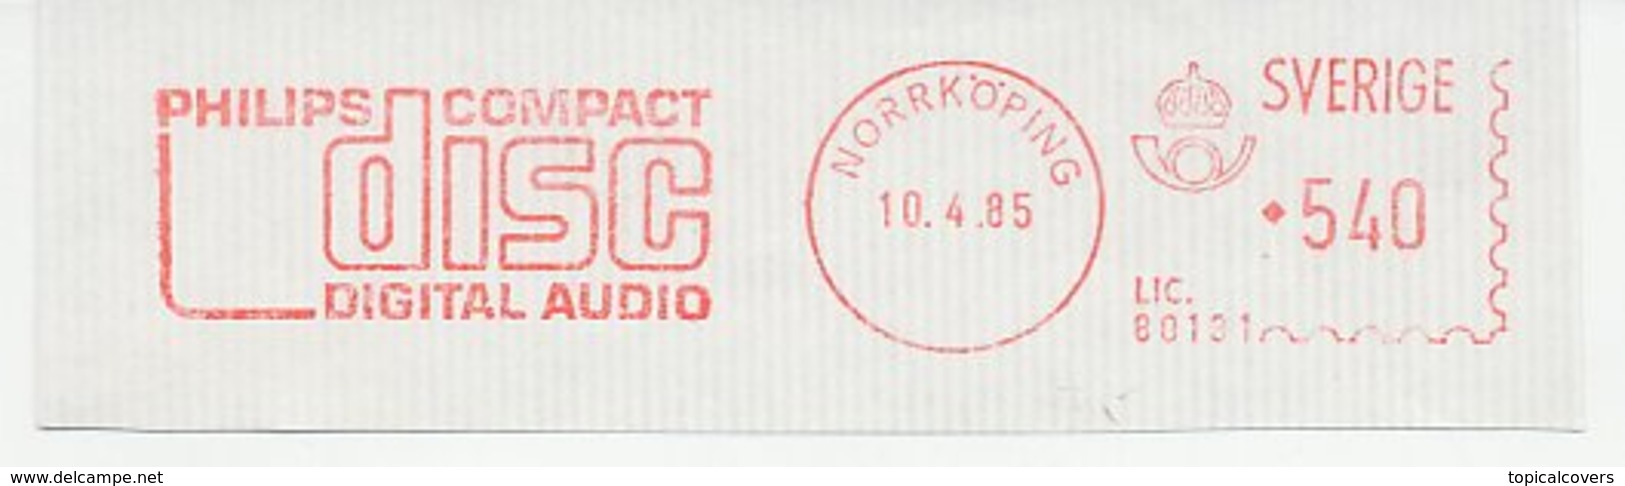 Meter Cut Sweden 1985 Philips - Compact Disc - CD - Musik